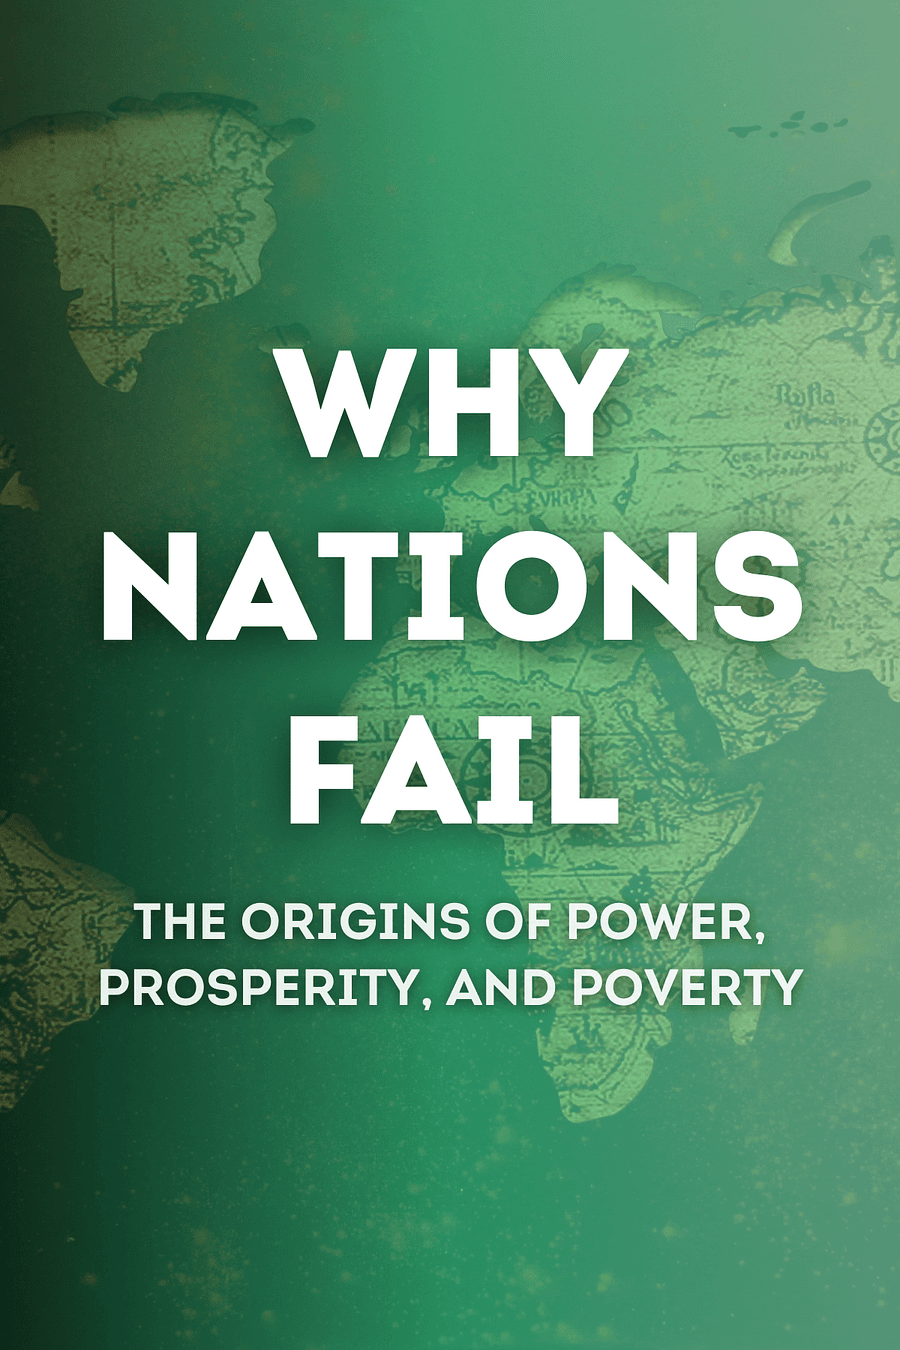 Why Nations Fail by Daron Acemoglu, James A. Robinson - Book Summary